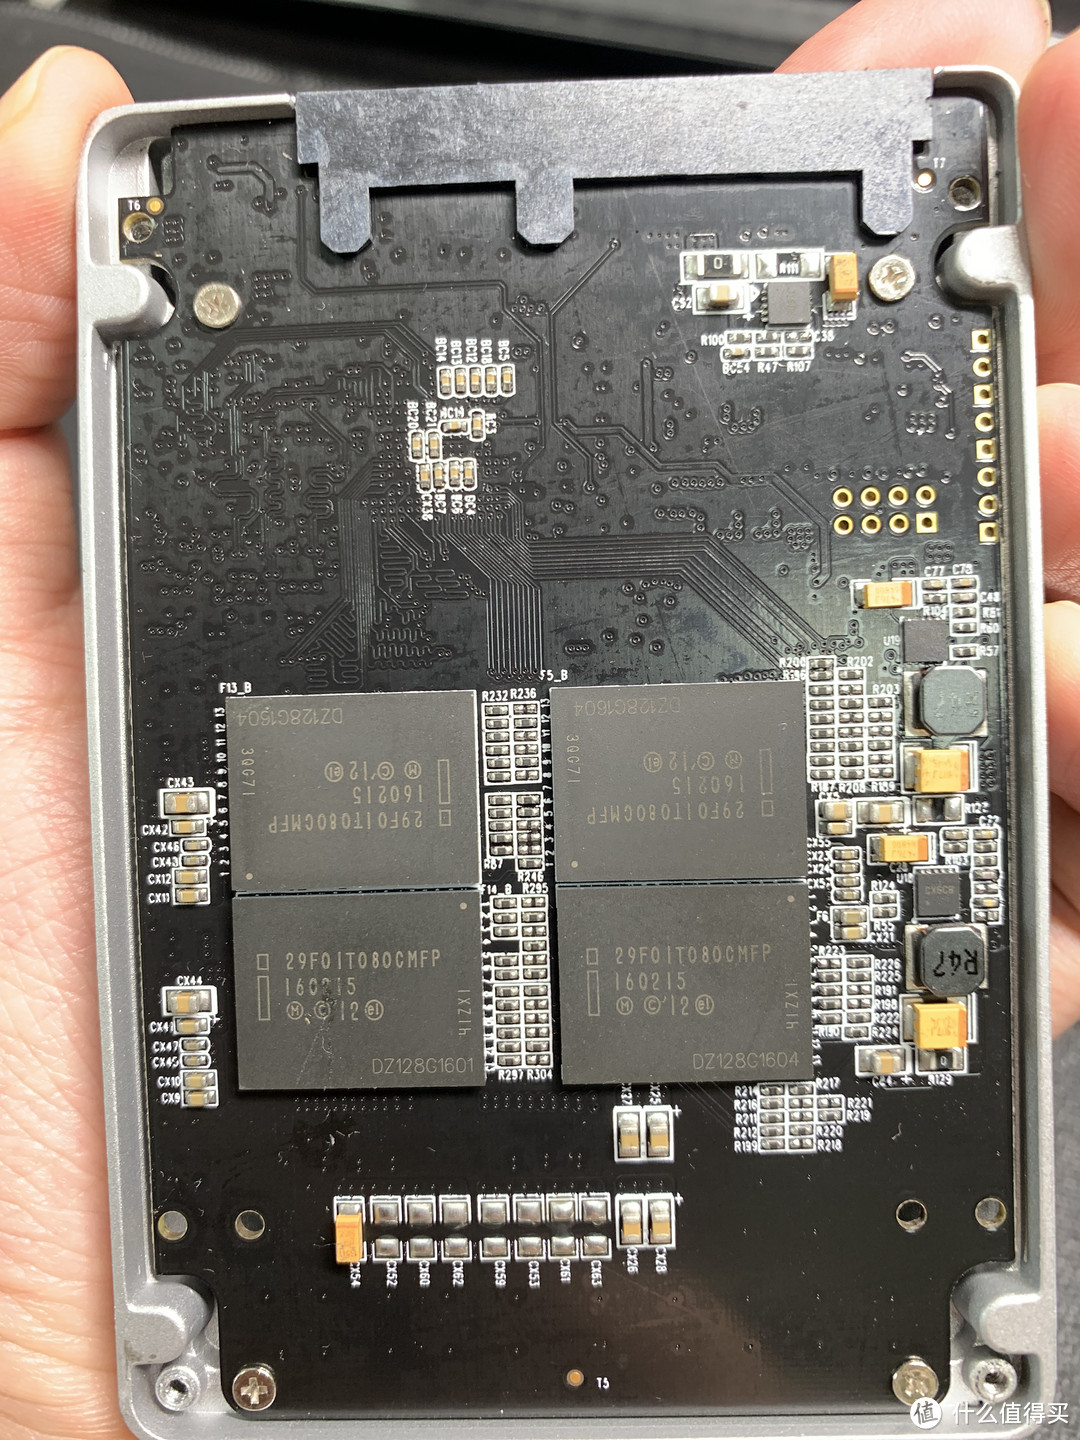 NAND闪存的型号:Intel 29F01T080CMFP